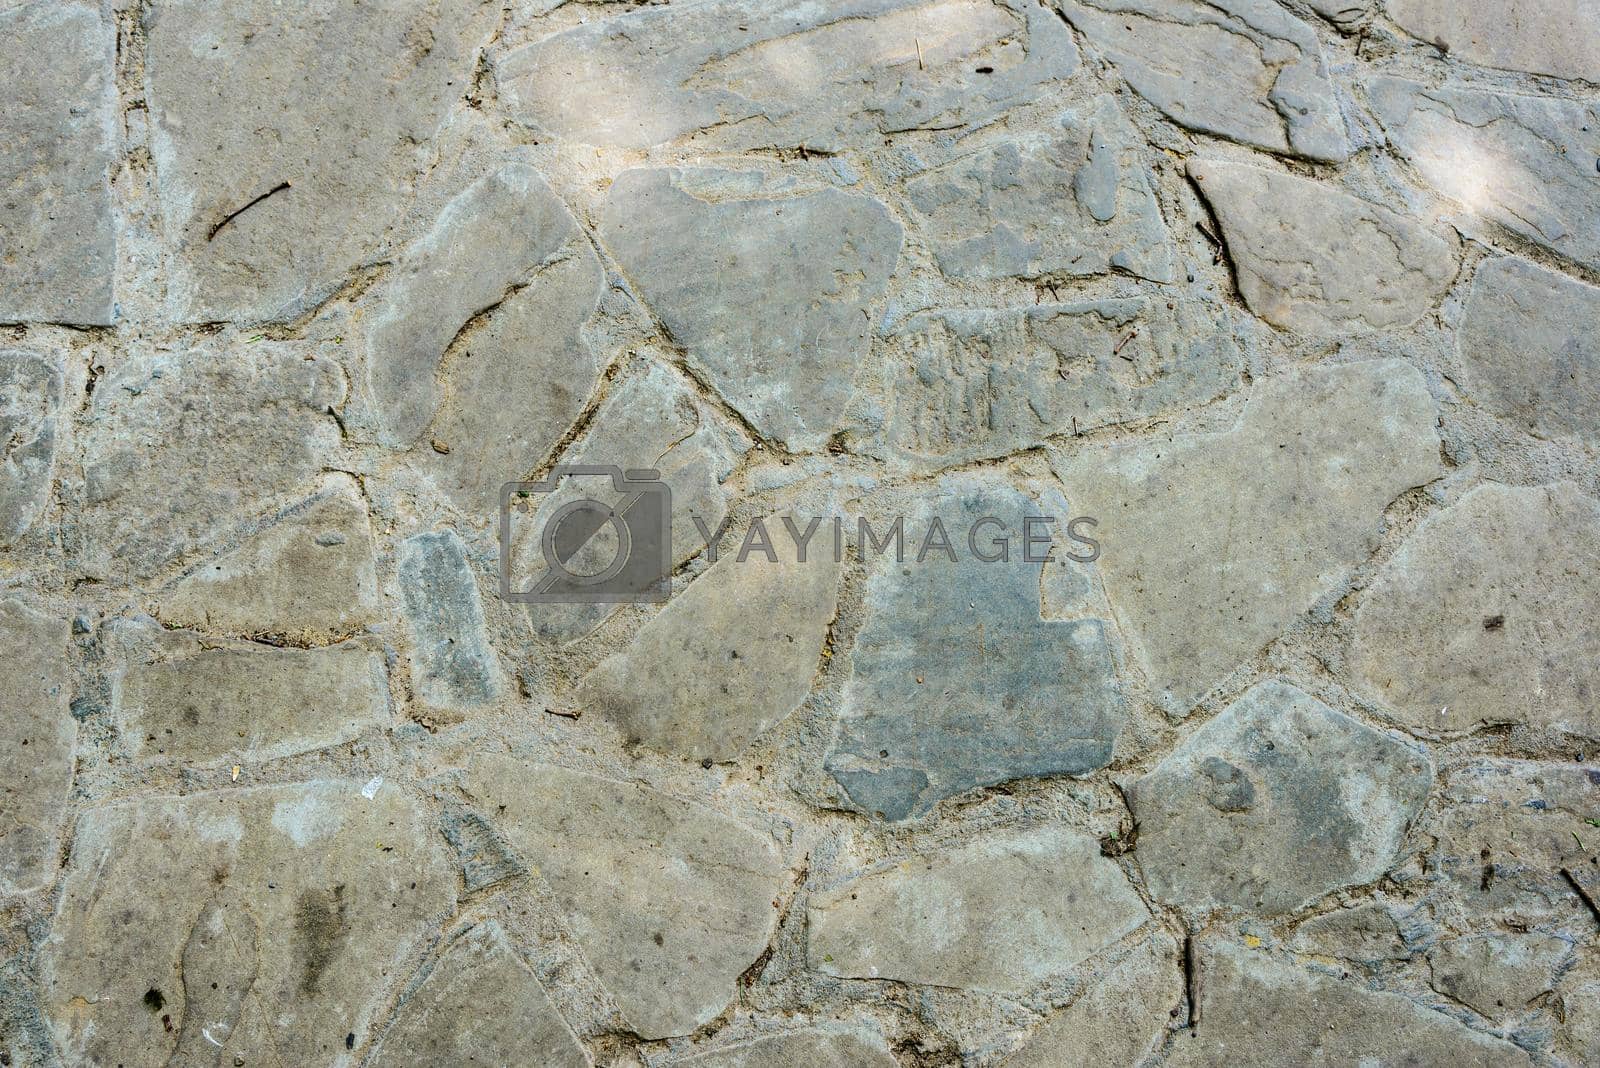 Royalty free image of Texture of the masonry stone wall, seamless pattern by zartarn